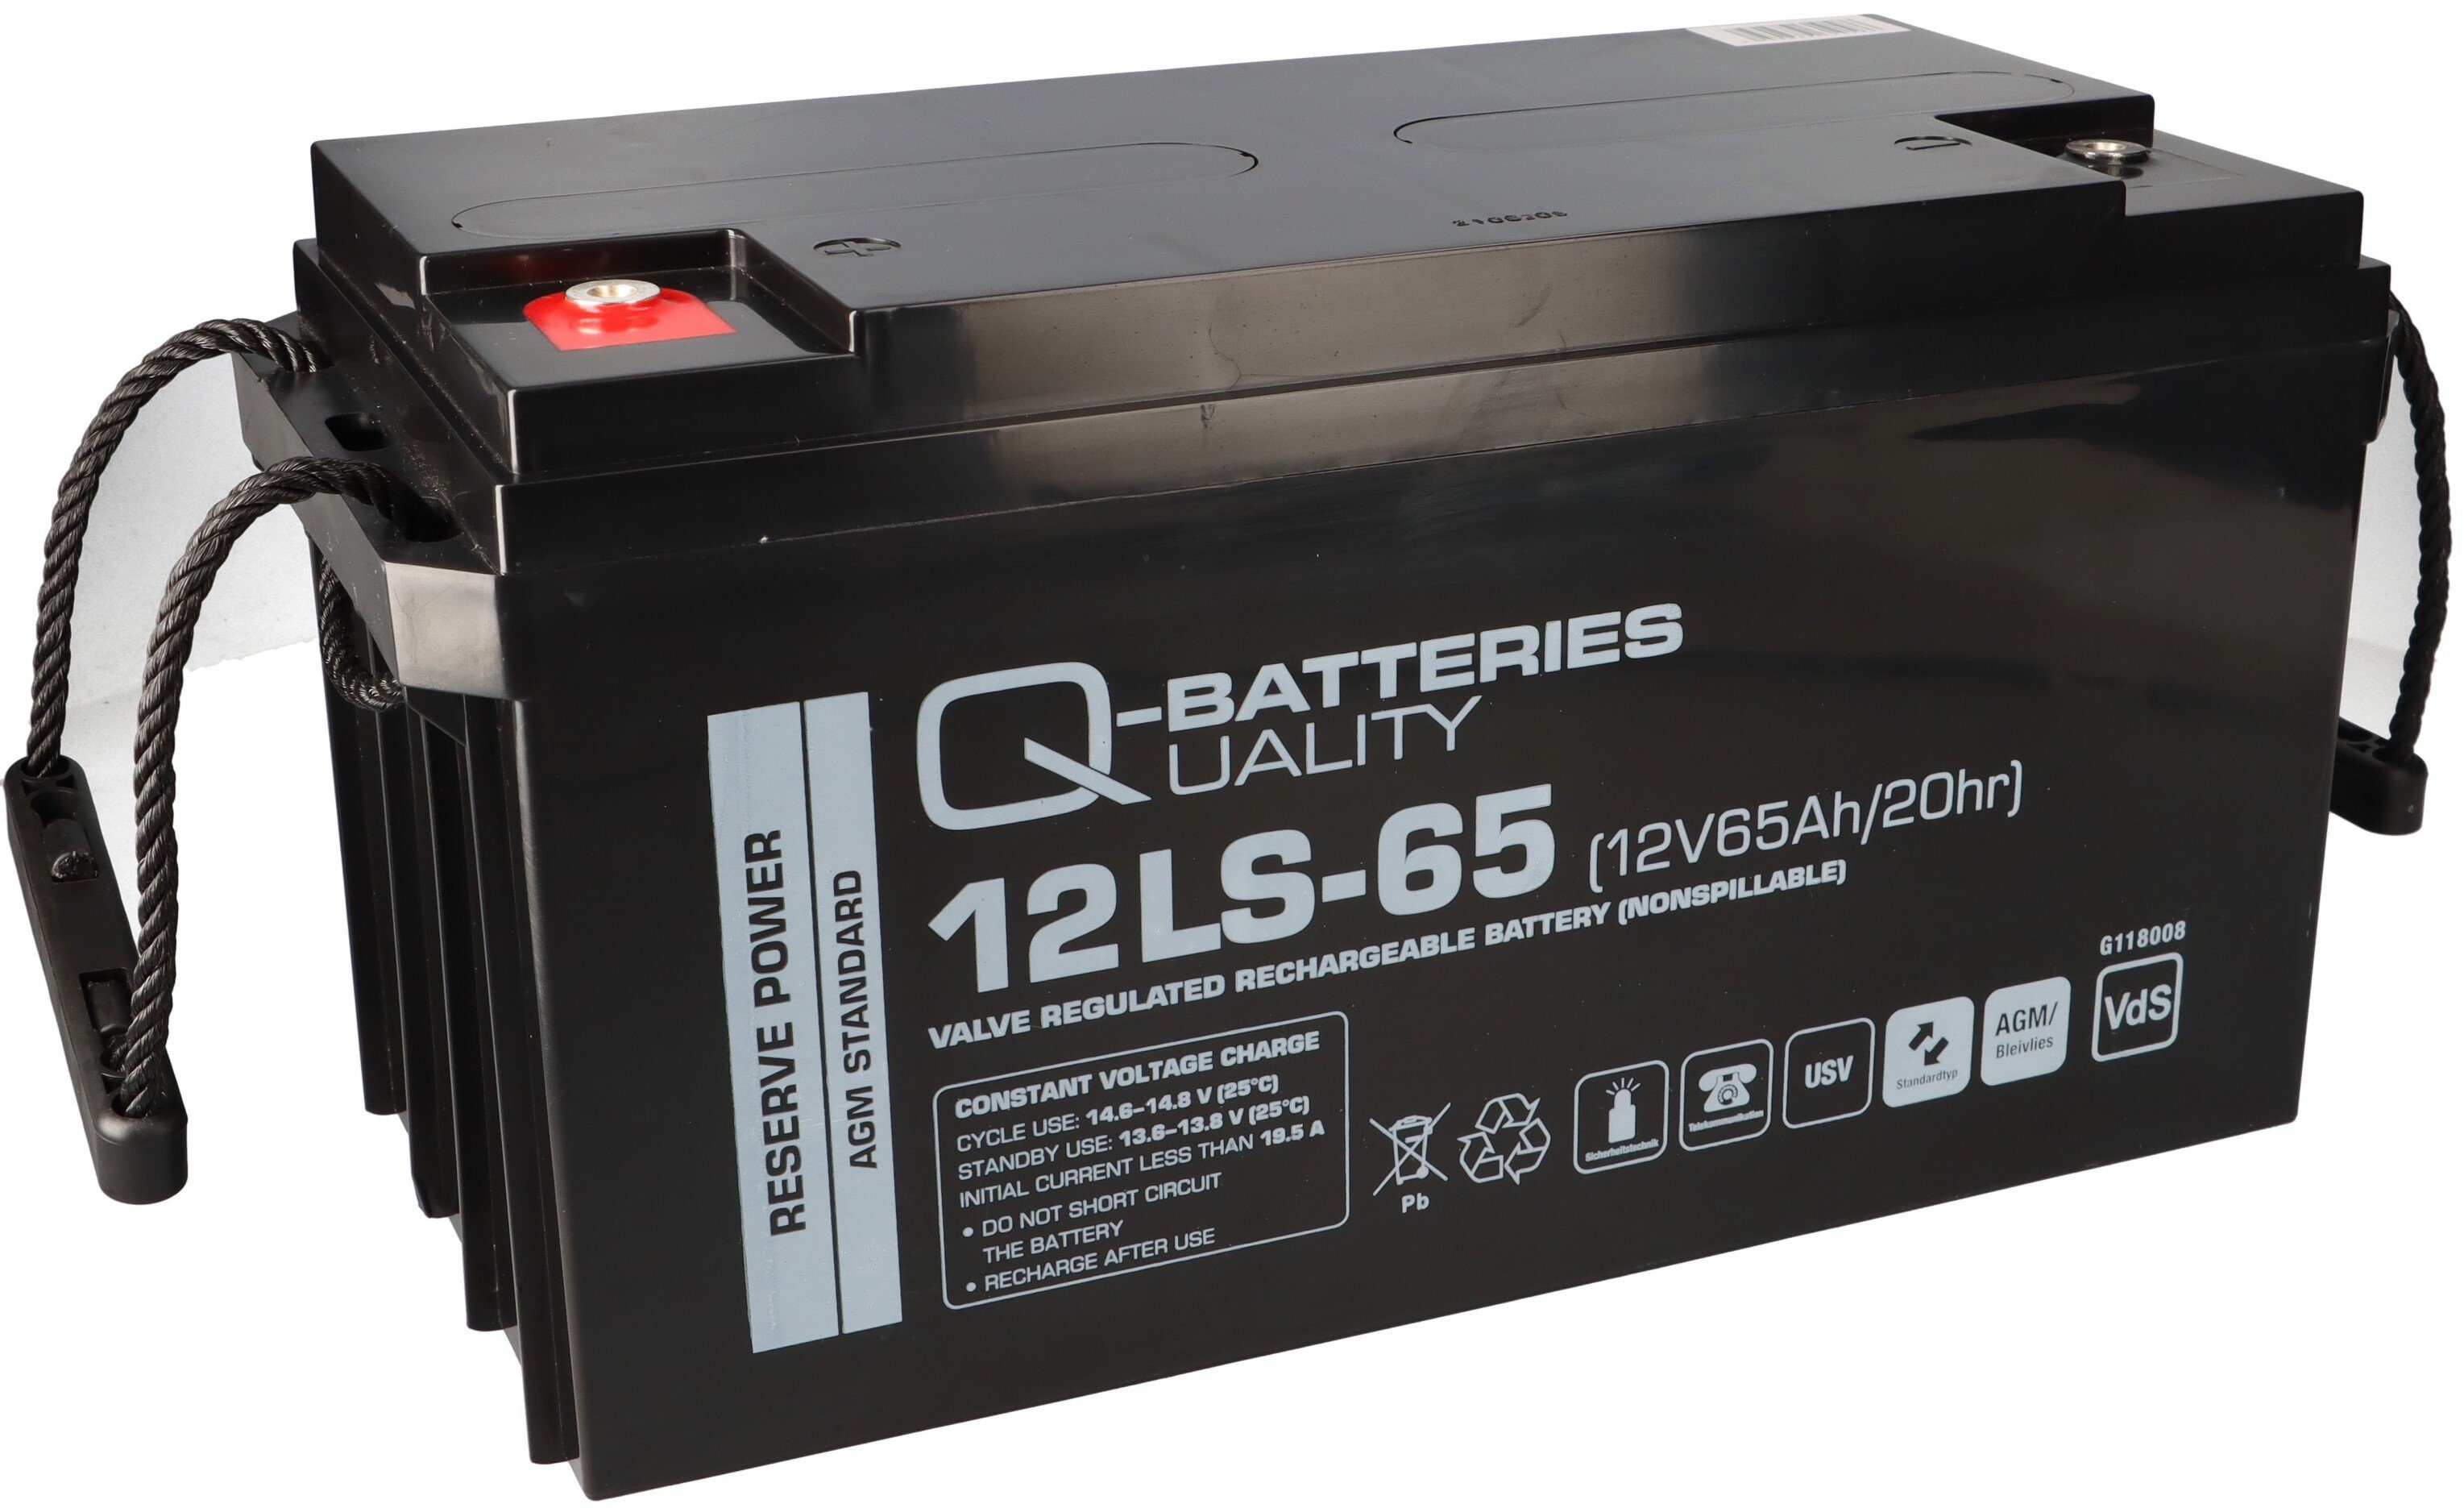 Q-Batteries Q-Batteries 12LS-65 12V 65Ah Blei-Vlies-Akku / AGM VRLA mit VdS Bleiakkus